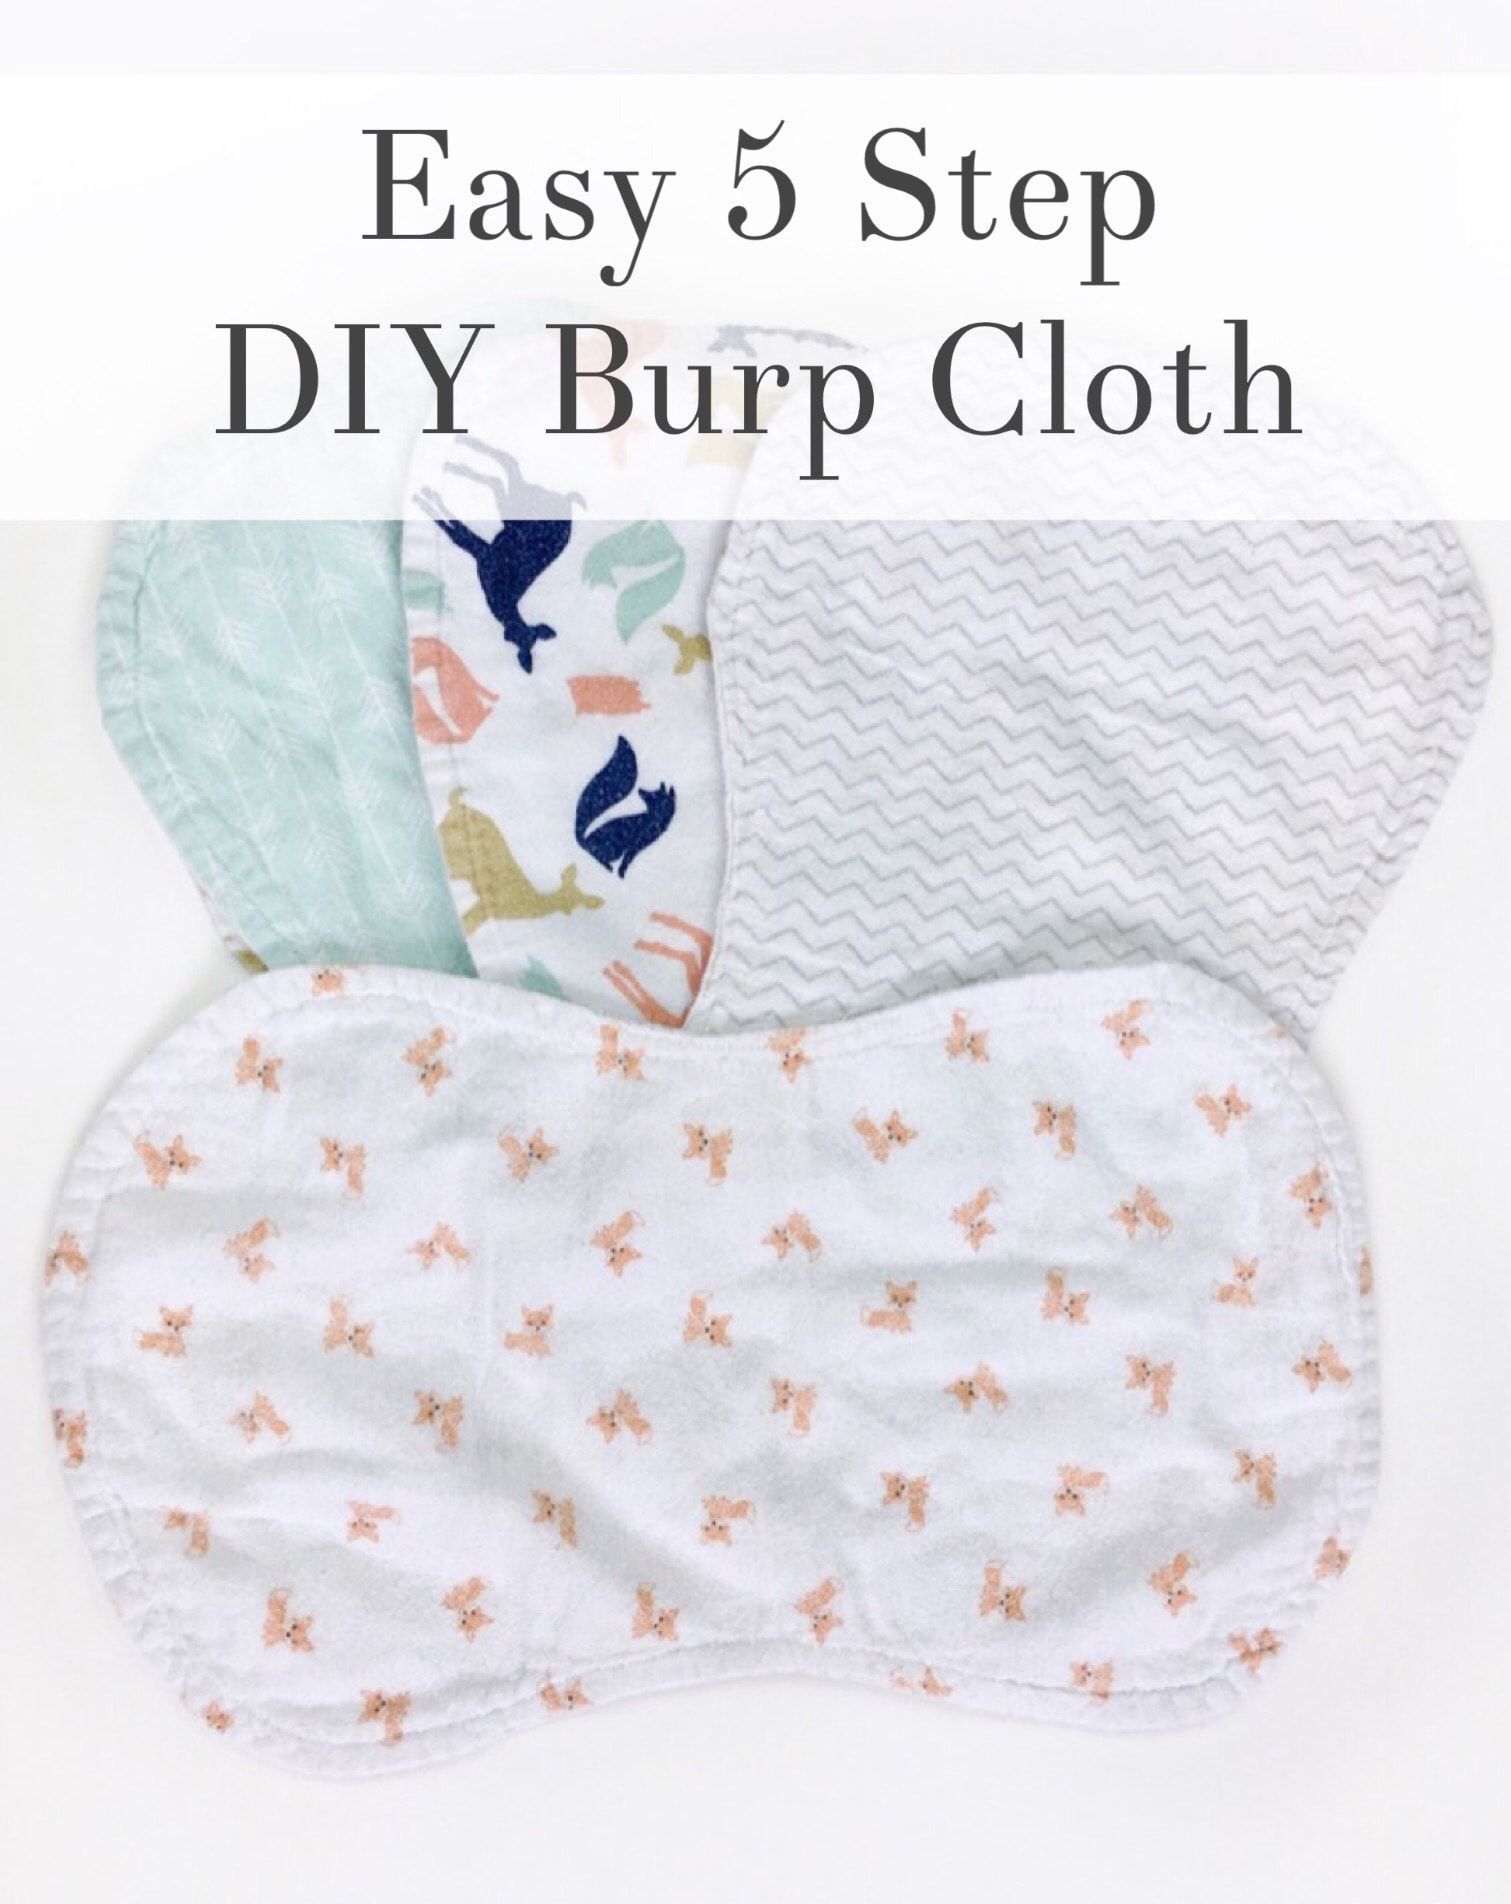 Easy 5 Step DIY Burp Cloth / Burp Rag -   17 DIY Clothes money ideas